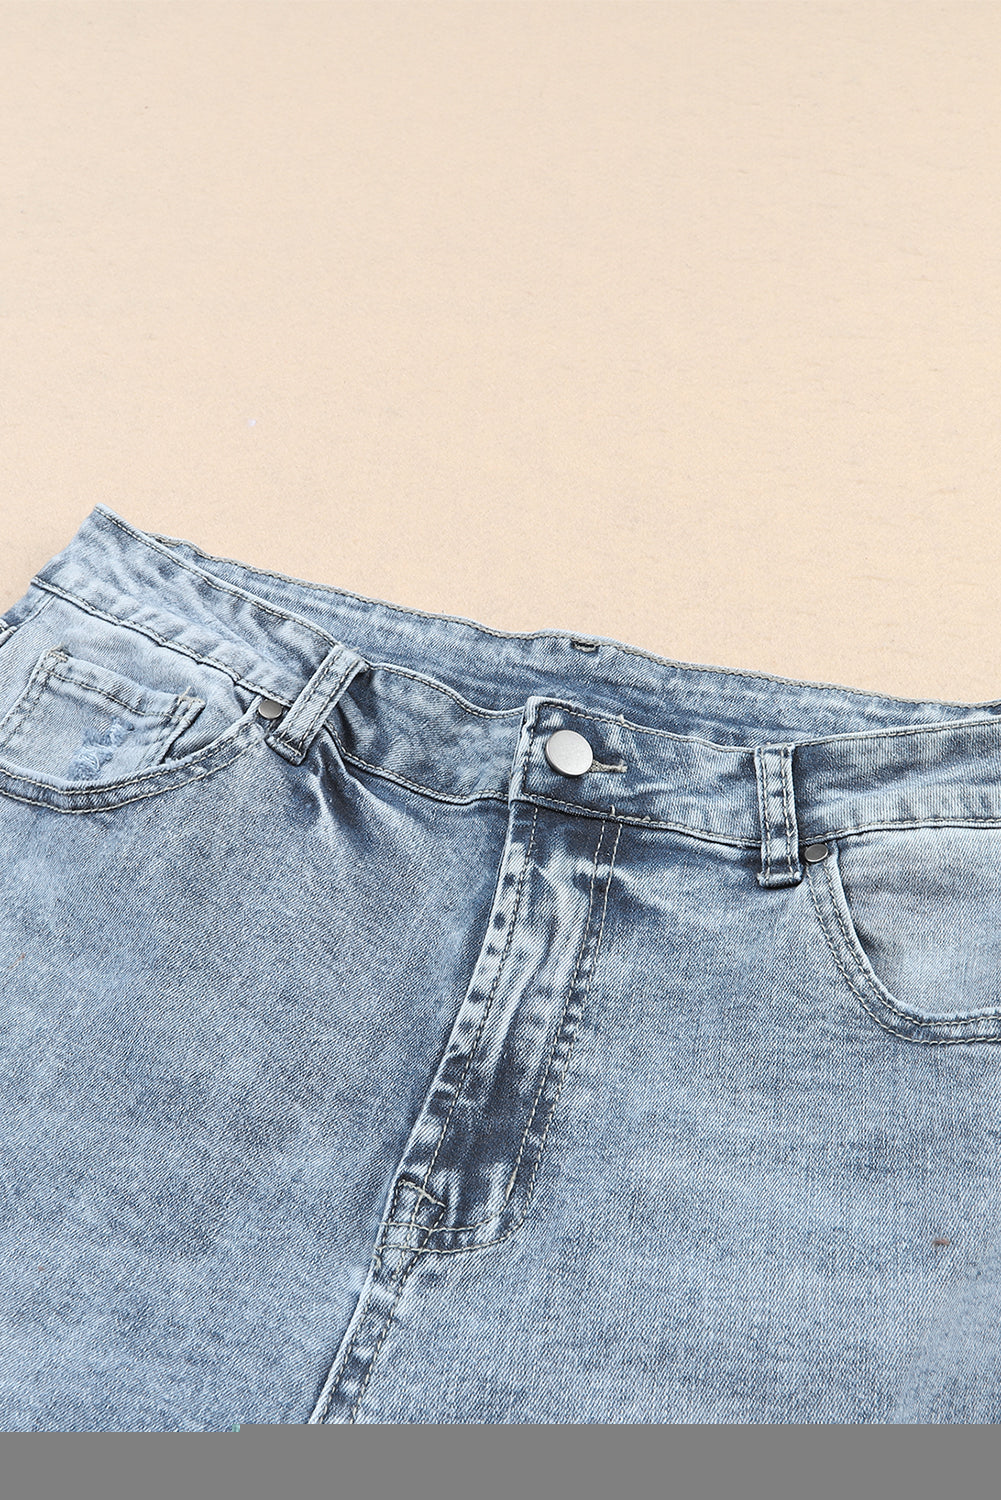 BMC♥️Sky Blue Light Wash Frayed Slim Fit High Waist Jeans